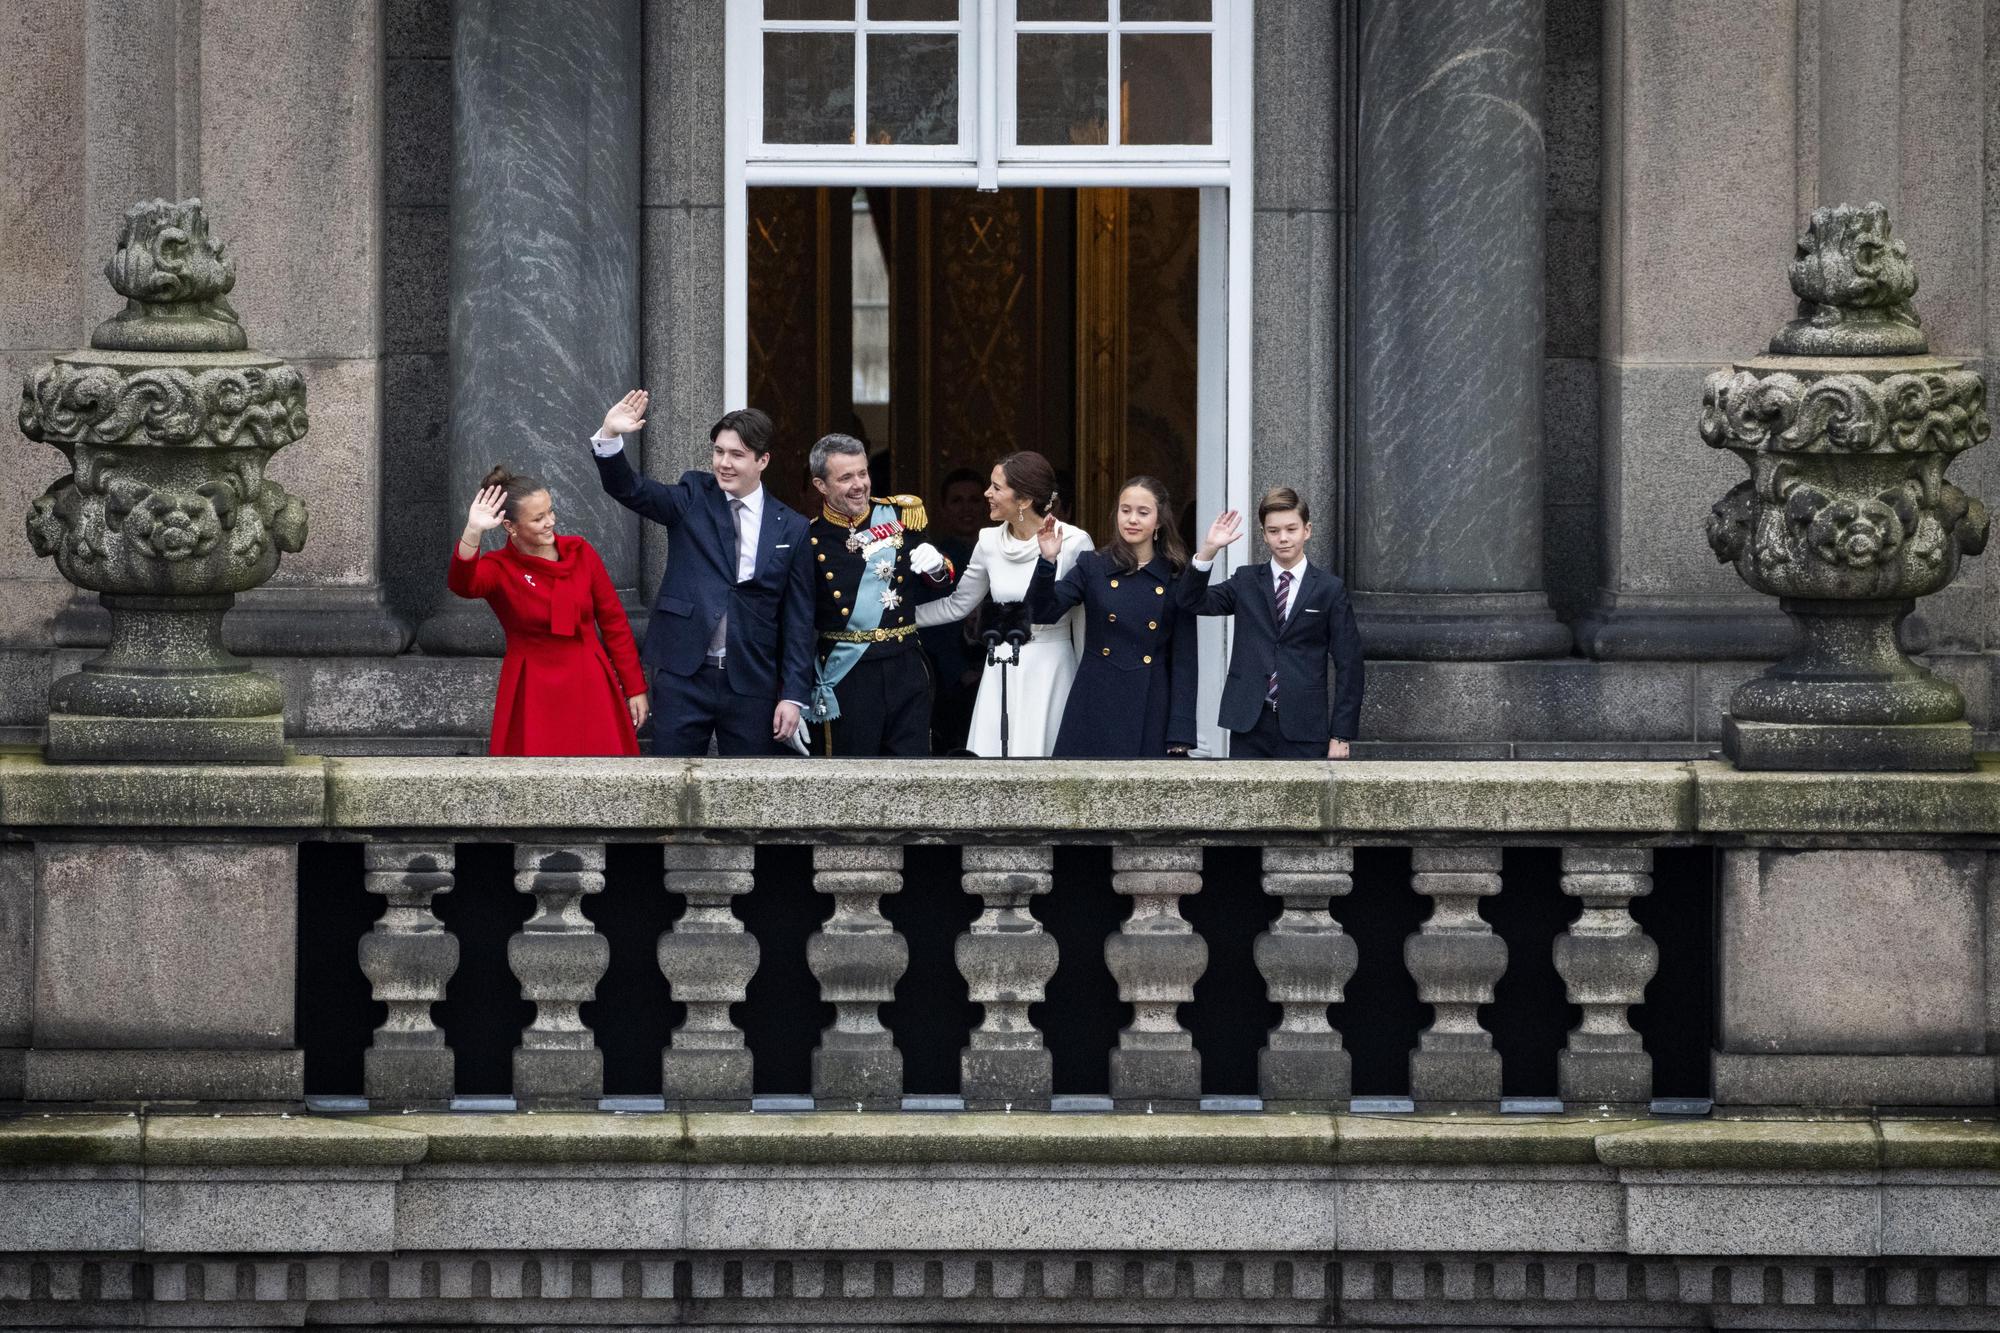 Denmark's Change of Throne